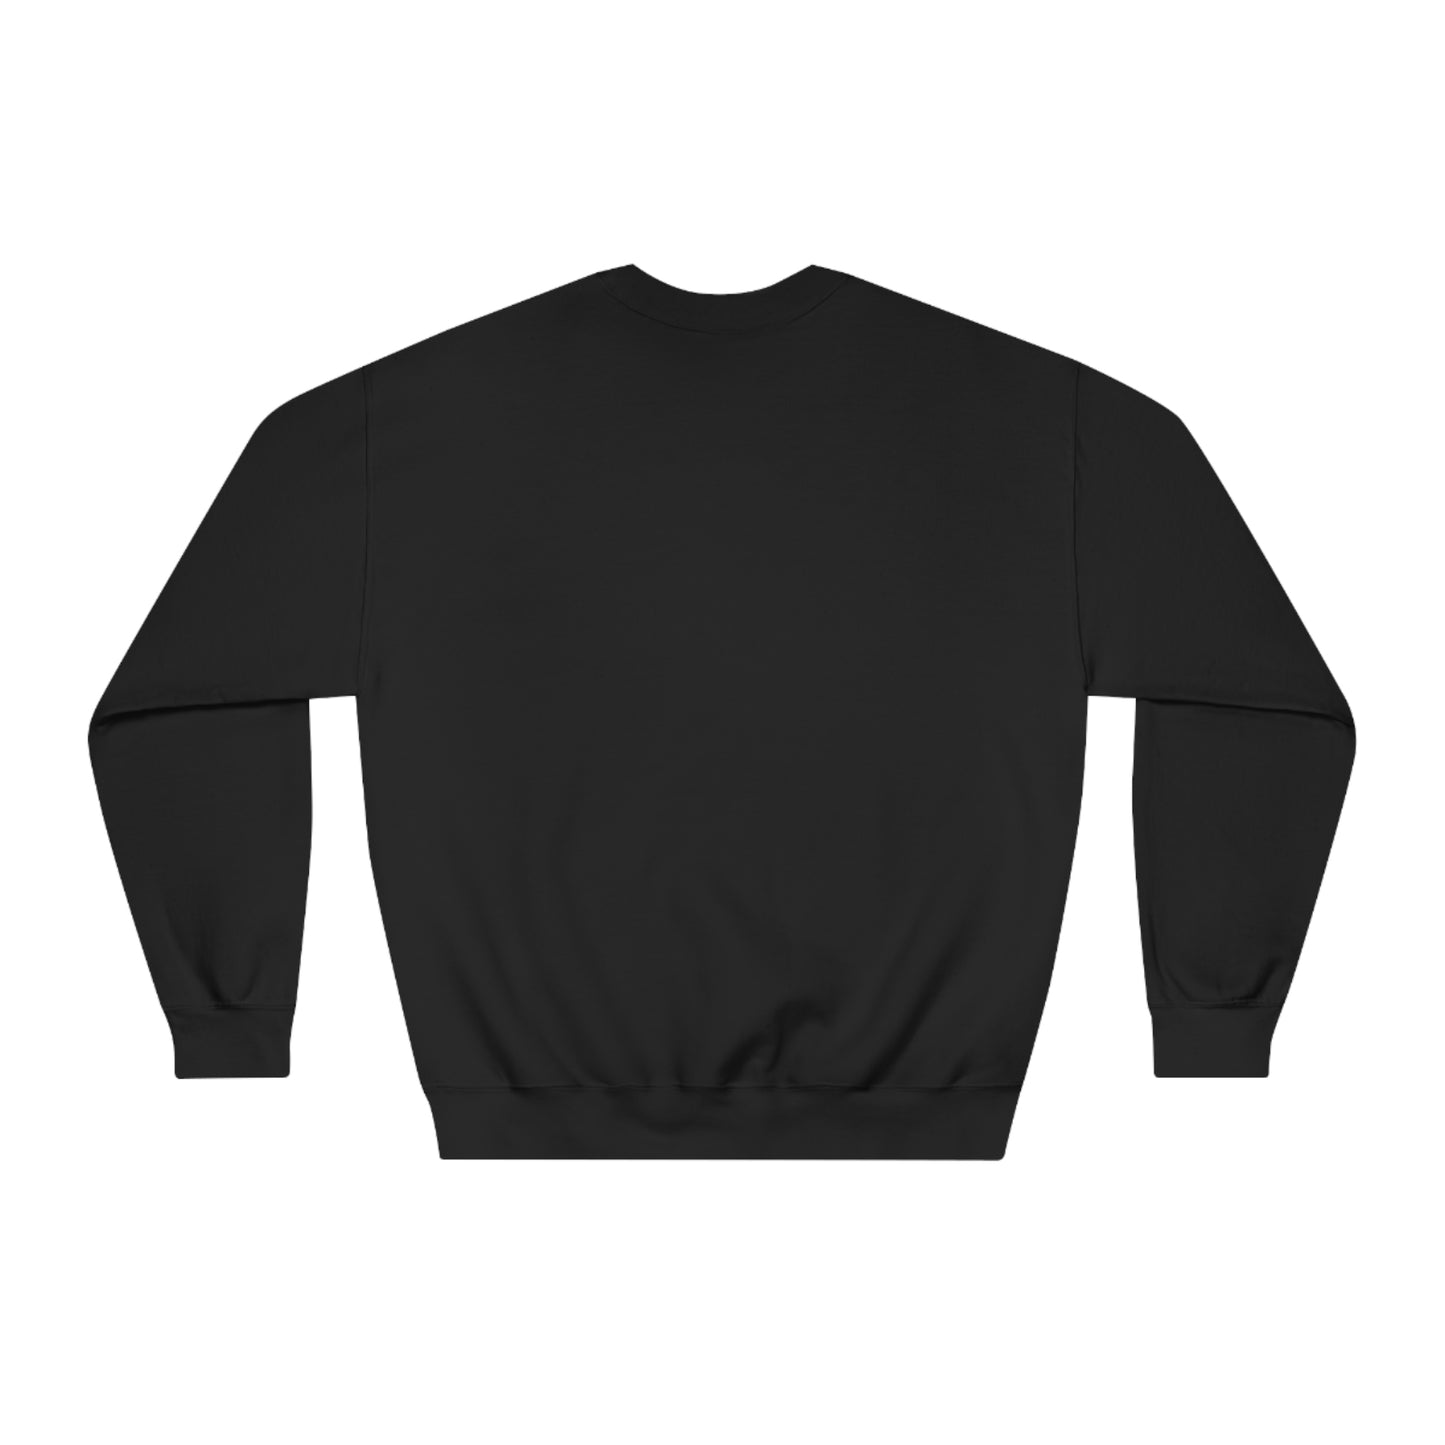 All About That Base - Unisex DryBlend® Crewneck Sweatshirt